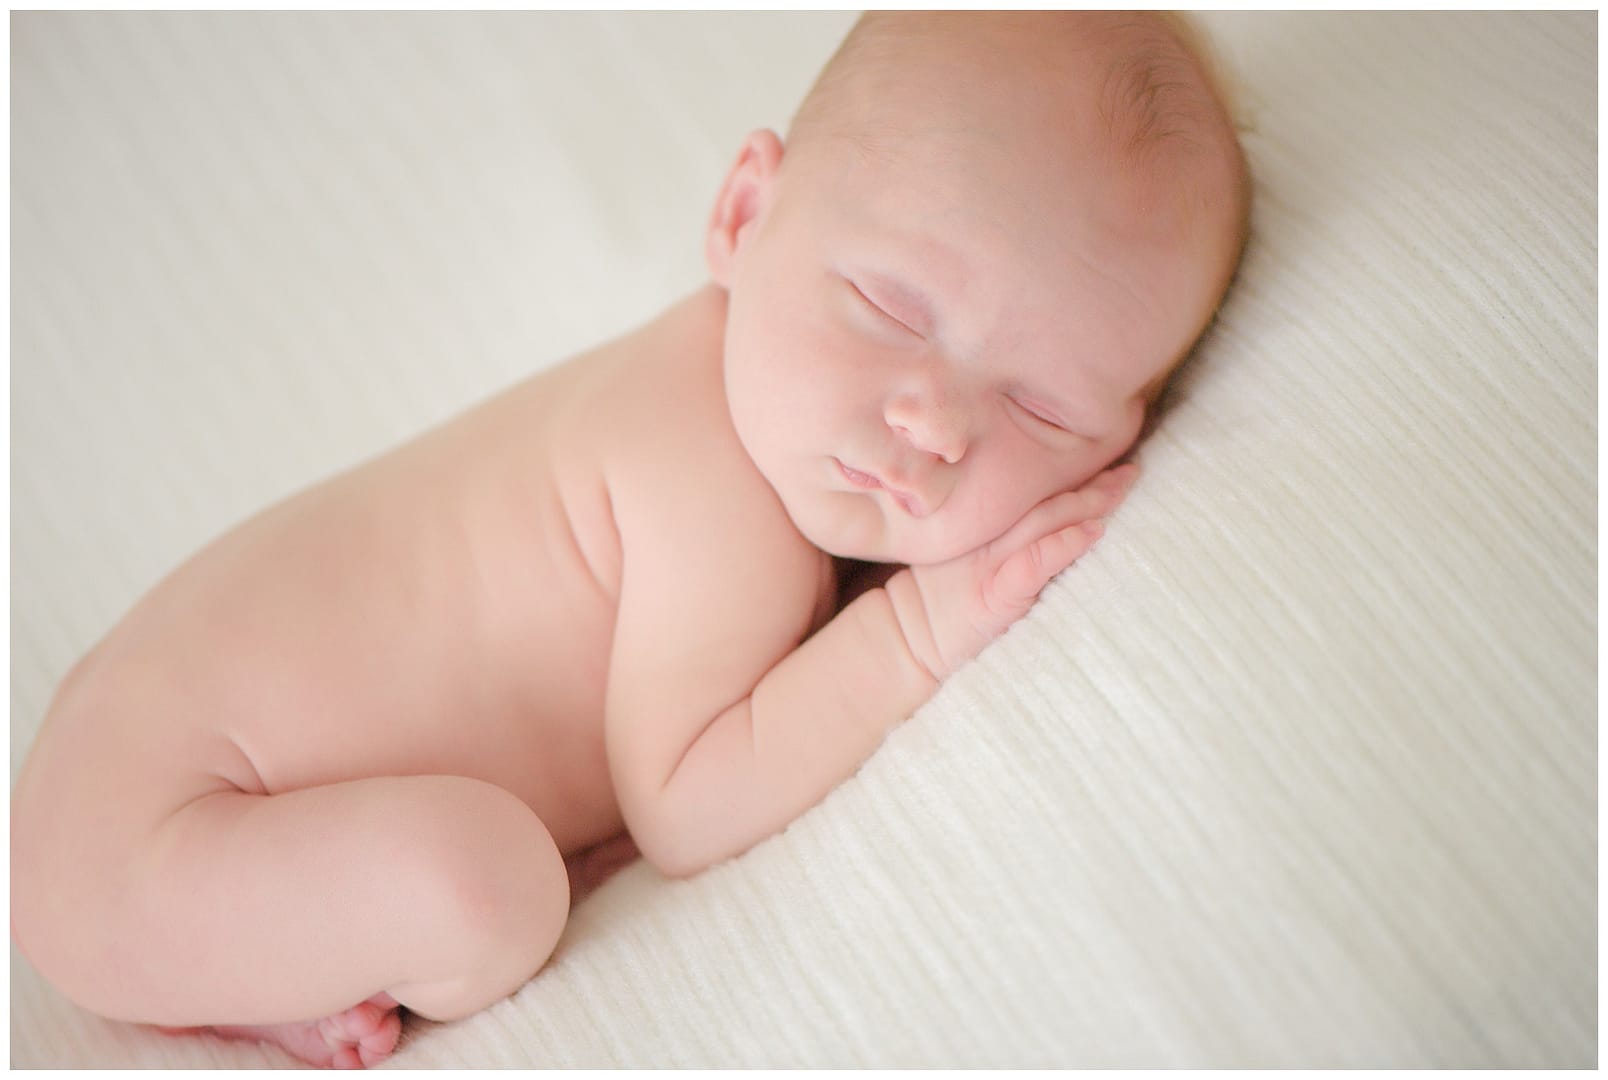 Boise newborn baby. Photos by Tiffany Hix Photography.